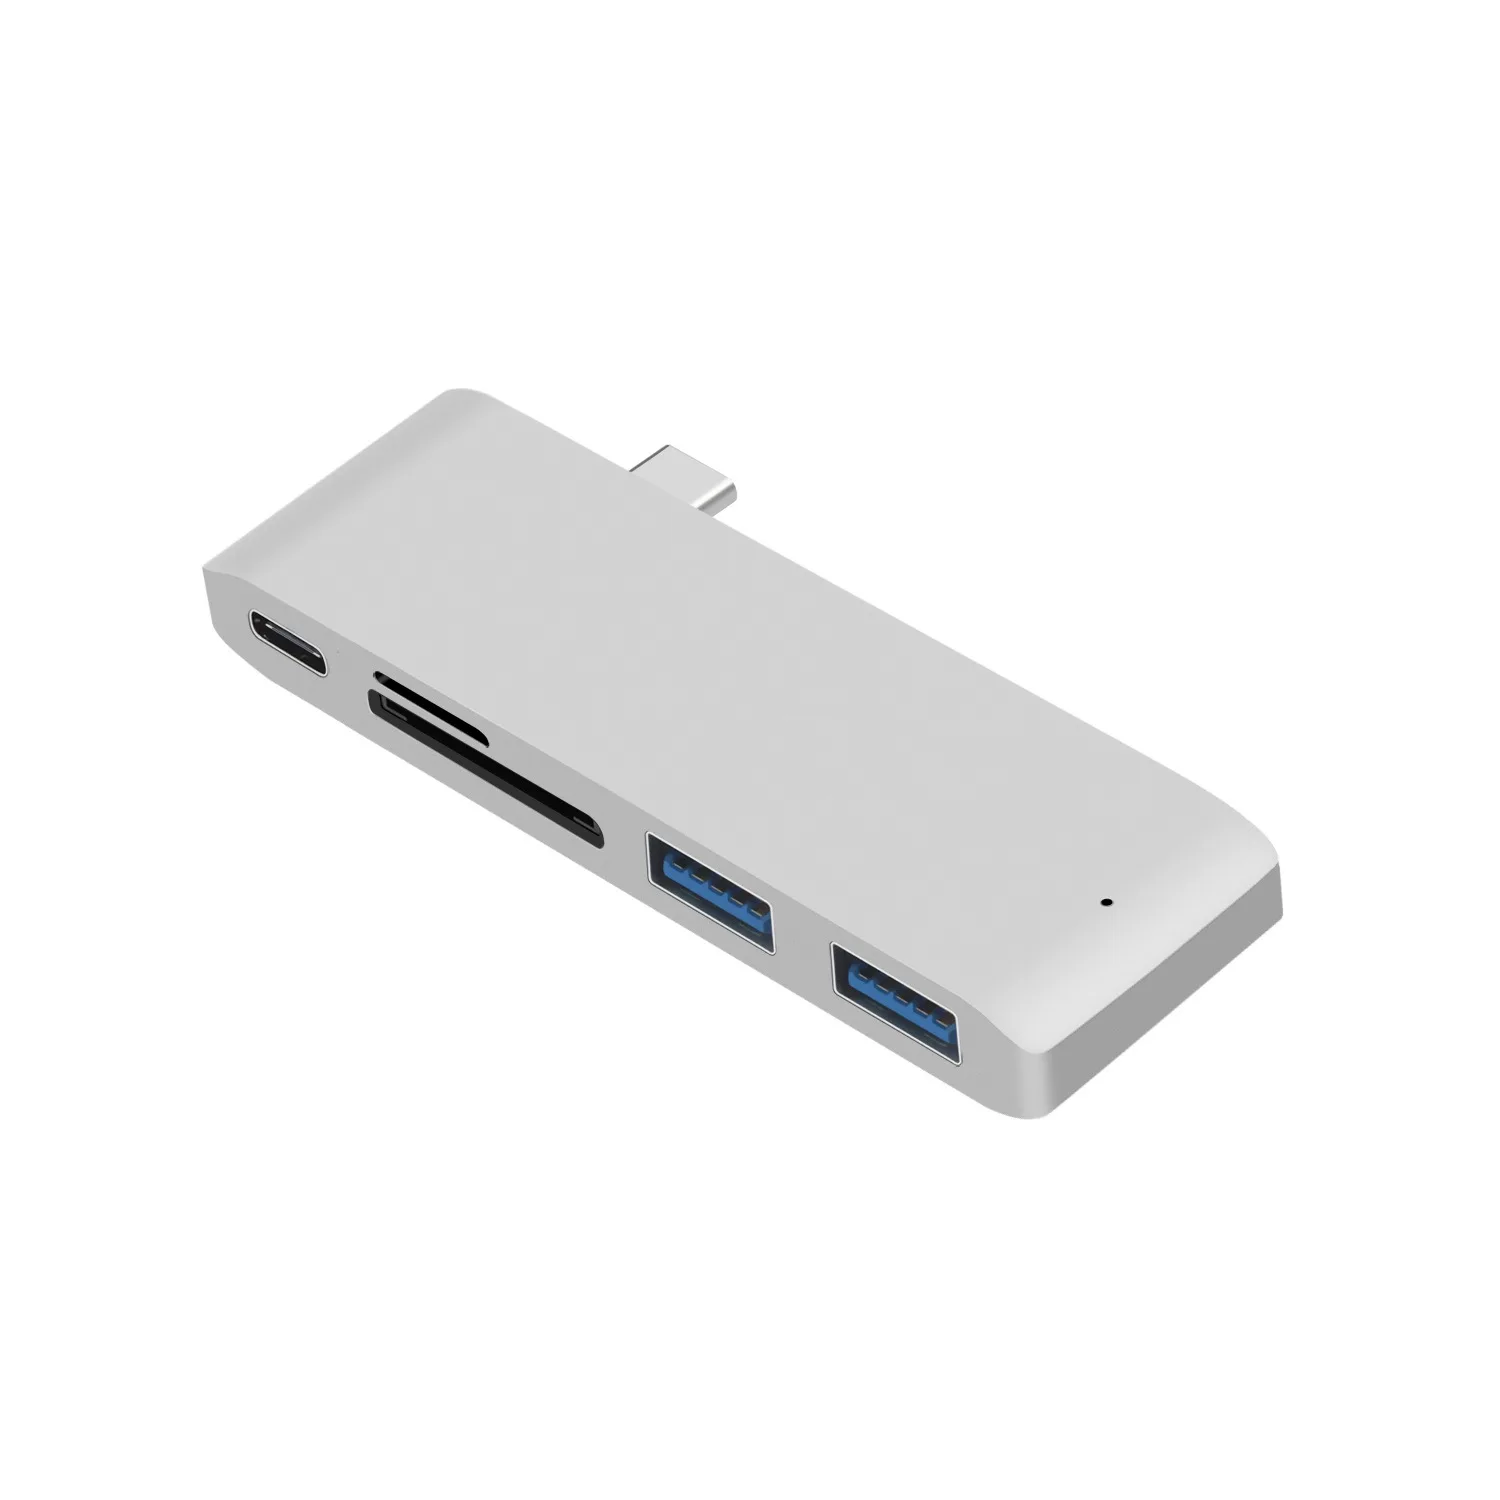 5 in1 серебро Тип usb-c USB C концентратор USB-C USB 3,0 SD устройство для считывания с tf-карт адаптеры для ноутбука 13/15 дюймов MacBook Pro - Цвет: Серый